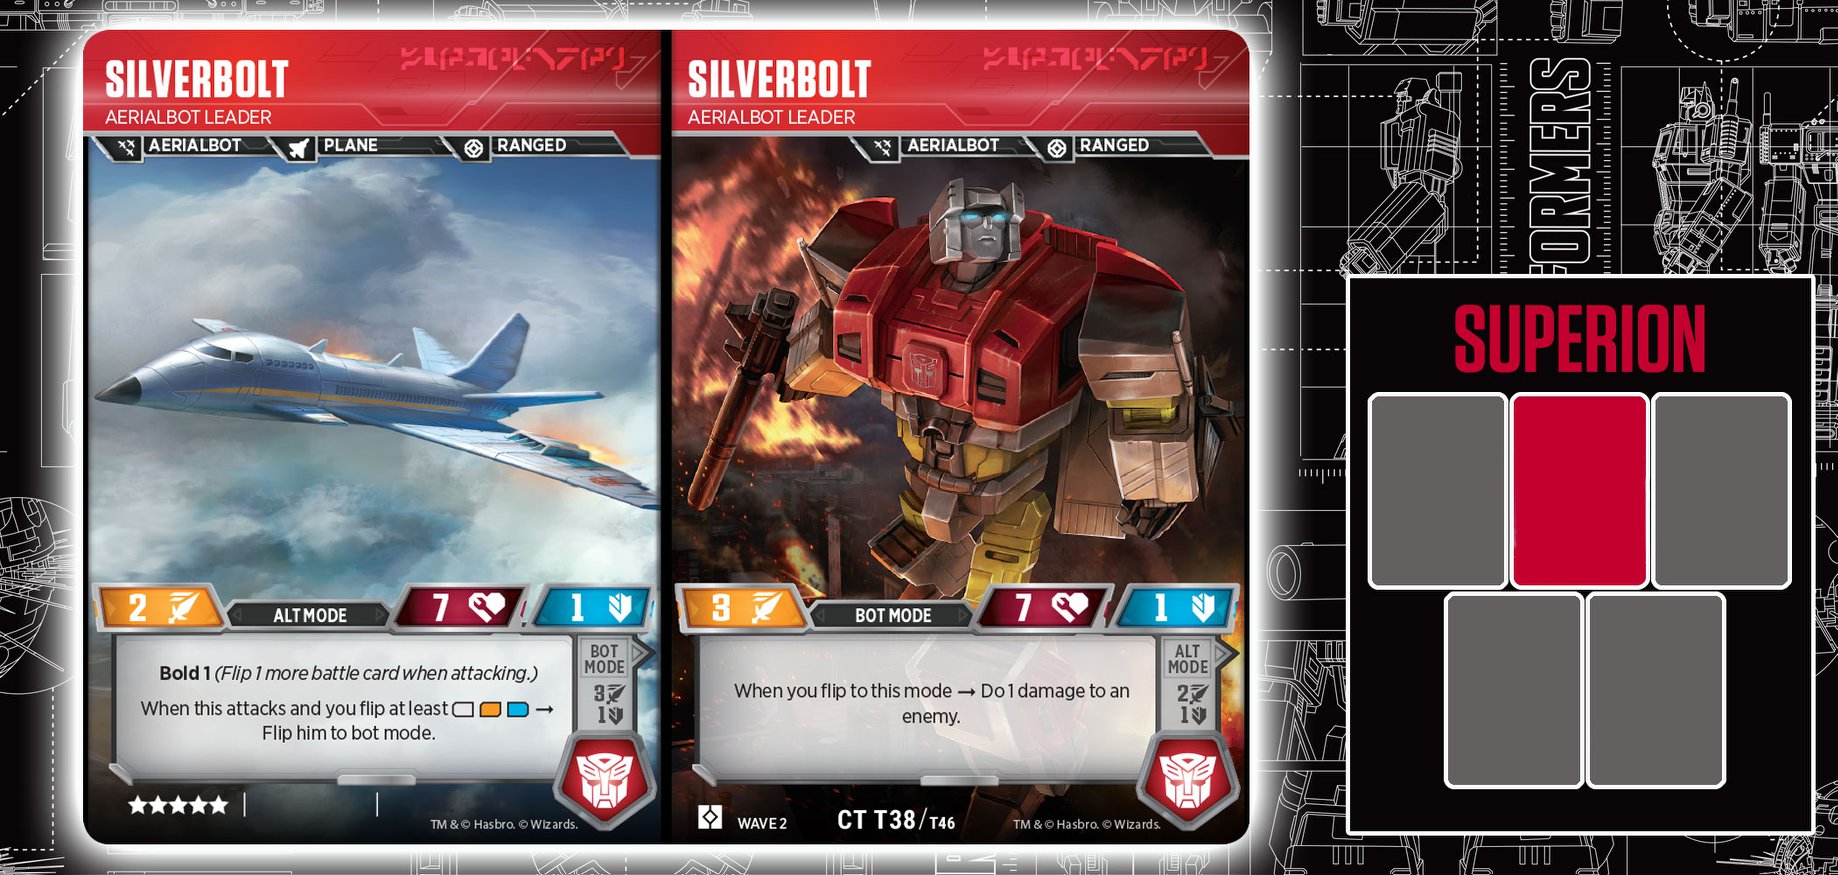 Silverbolt, Aerialbot Leader